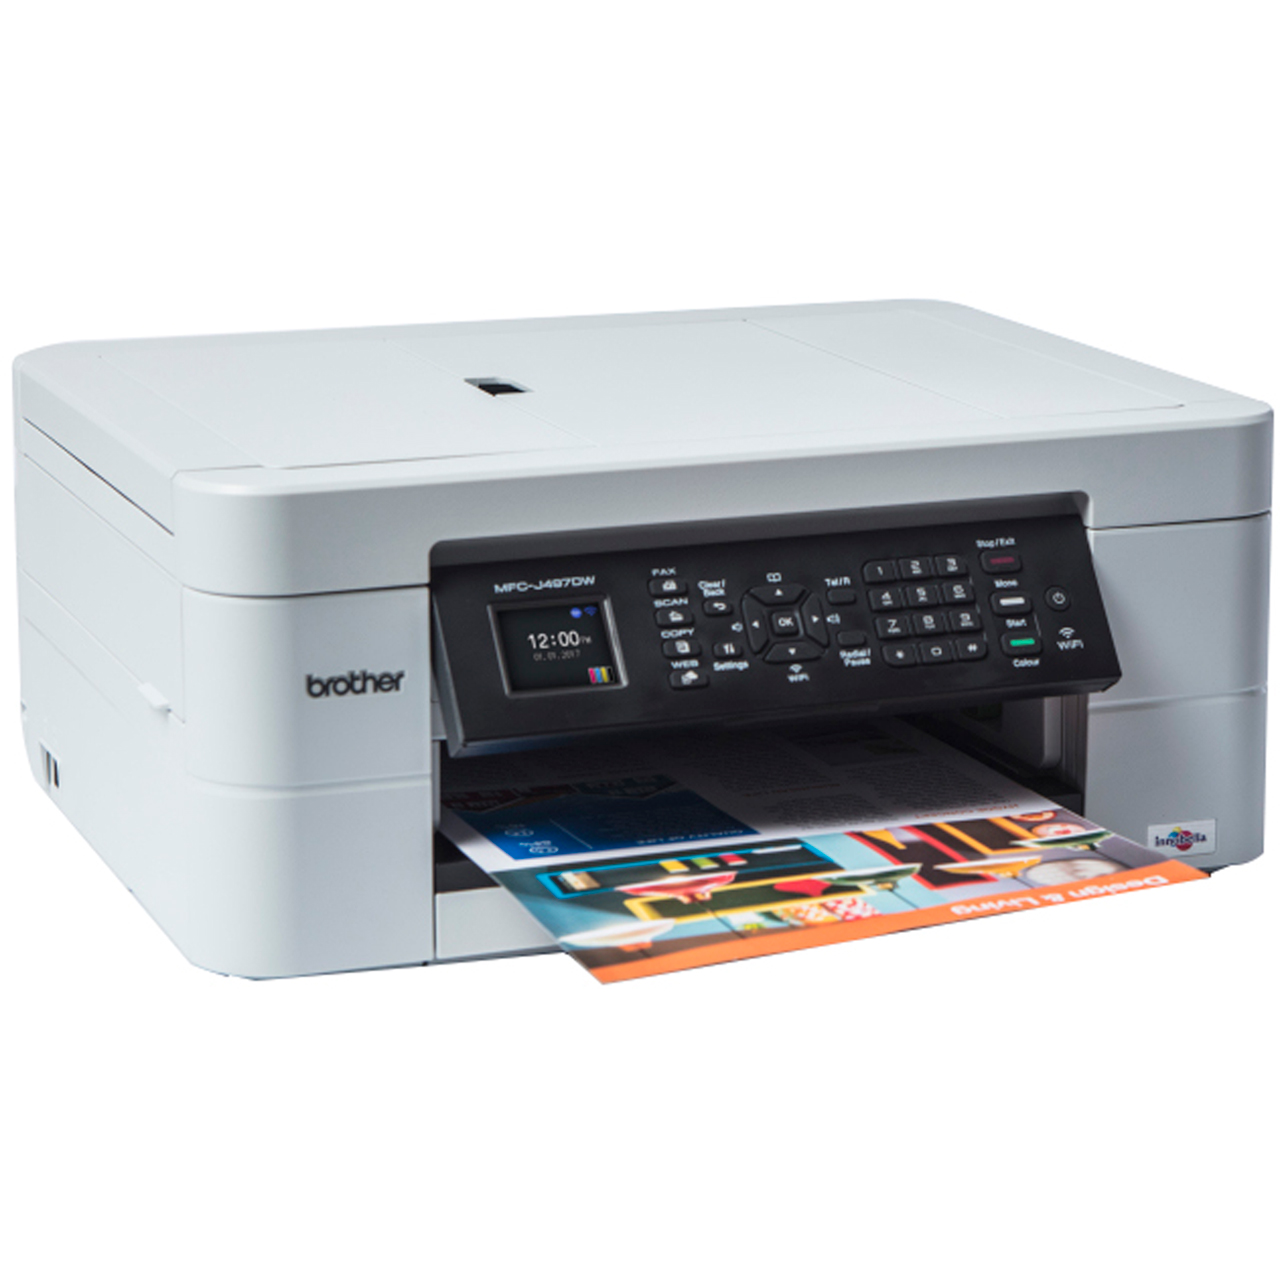 Brother MFC-J497DW Inkjet Printer Review